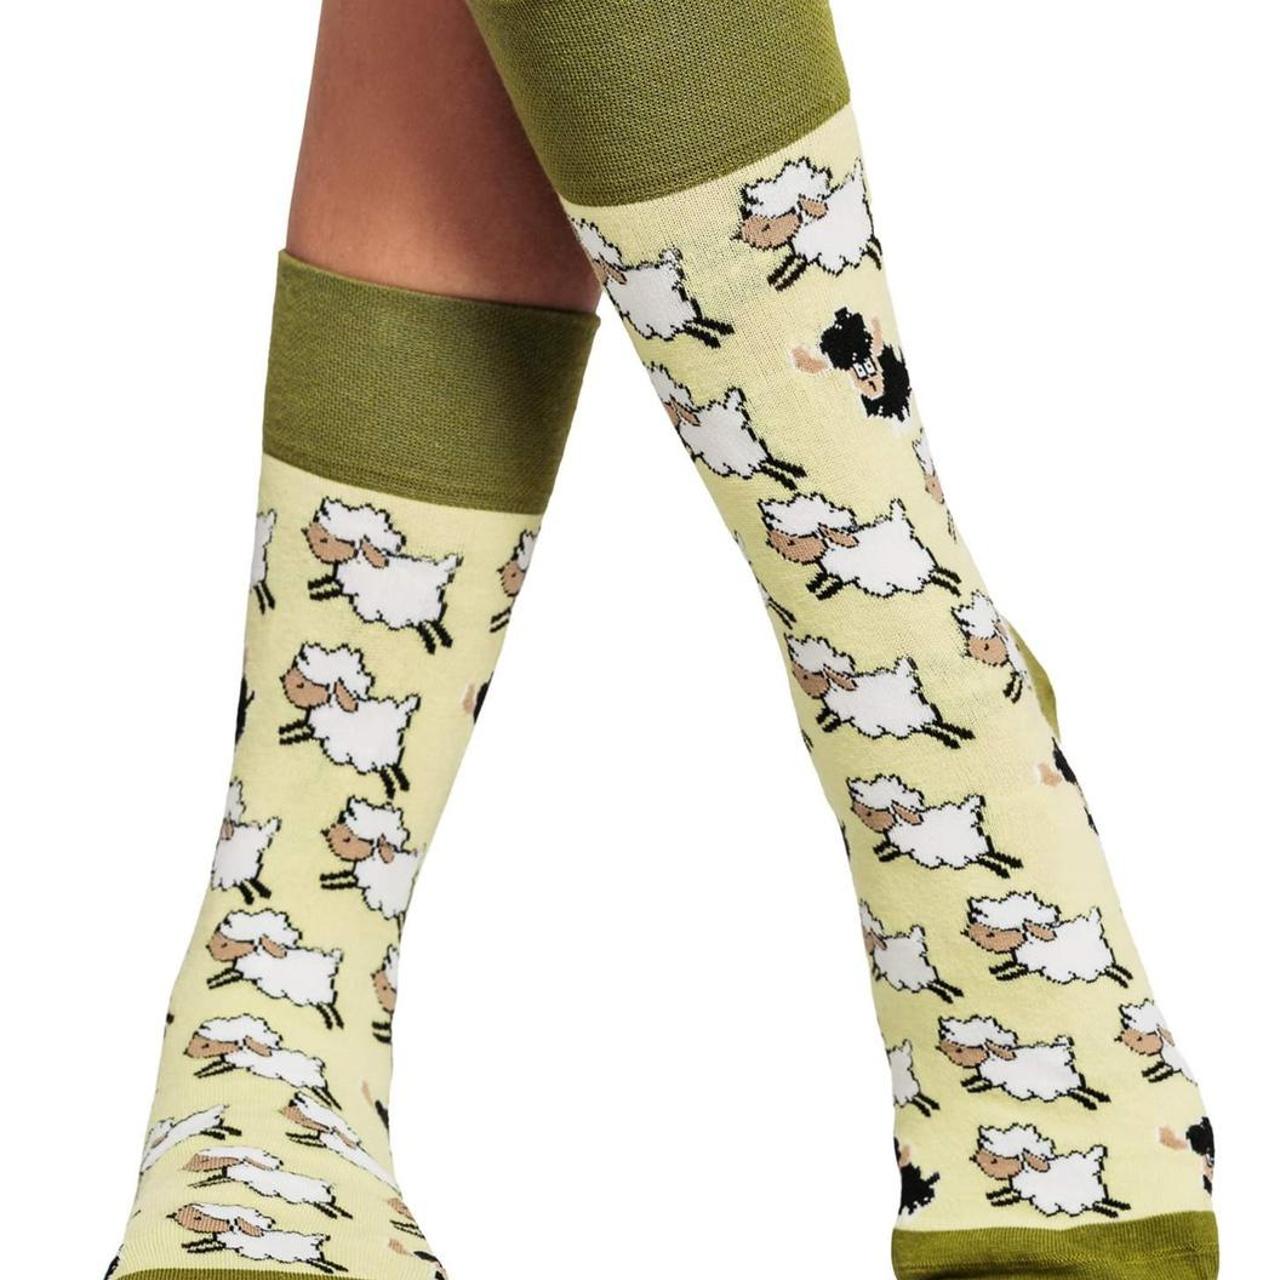 Product Image 1 - Women’s socks,green,sheep animal,78% Cotton,Sizes-35-39